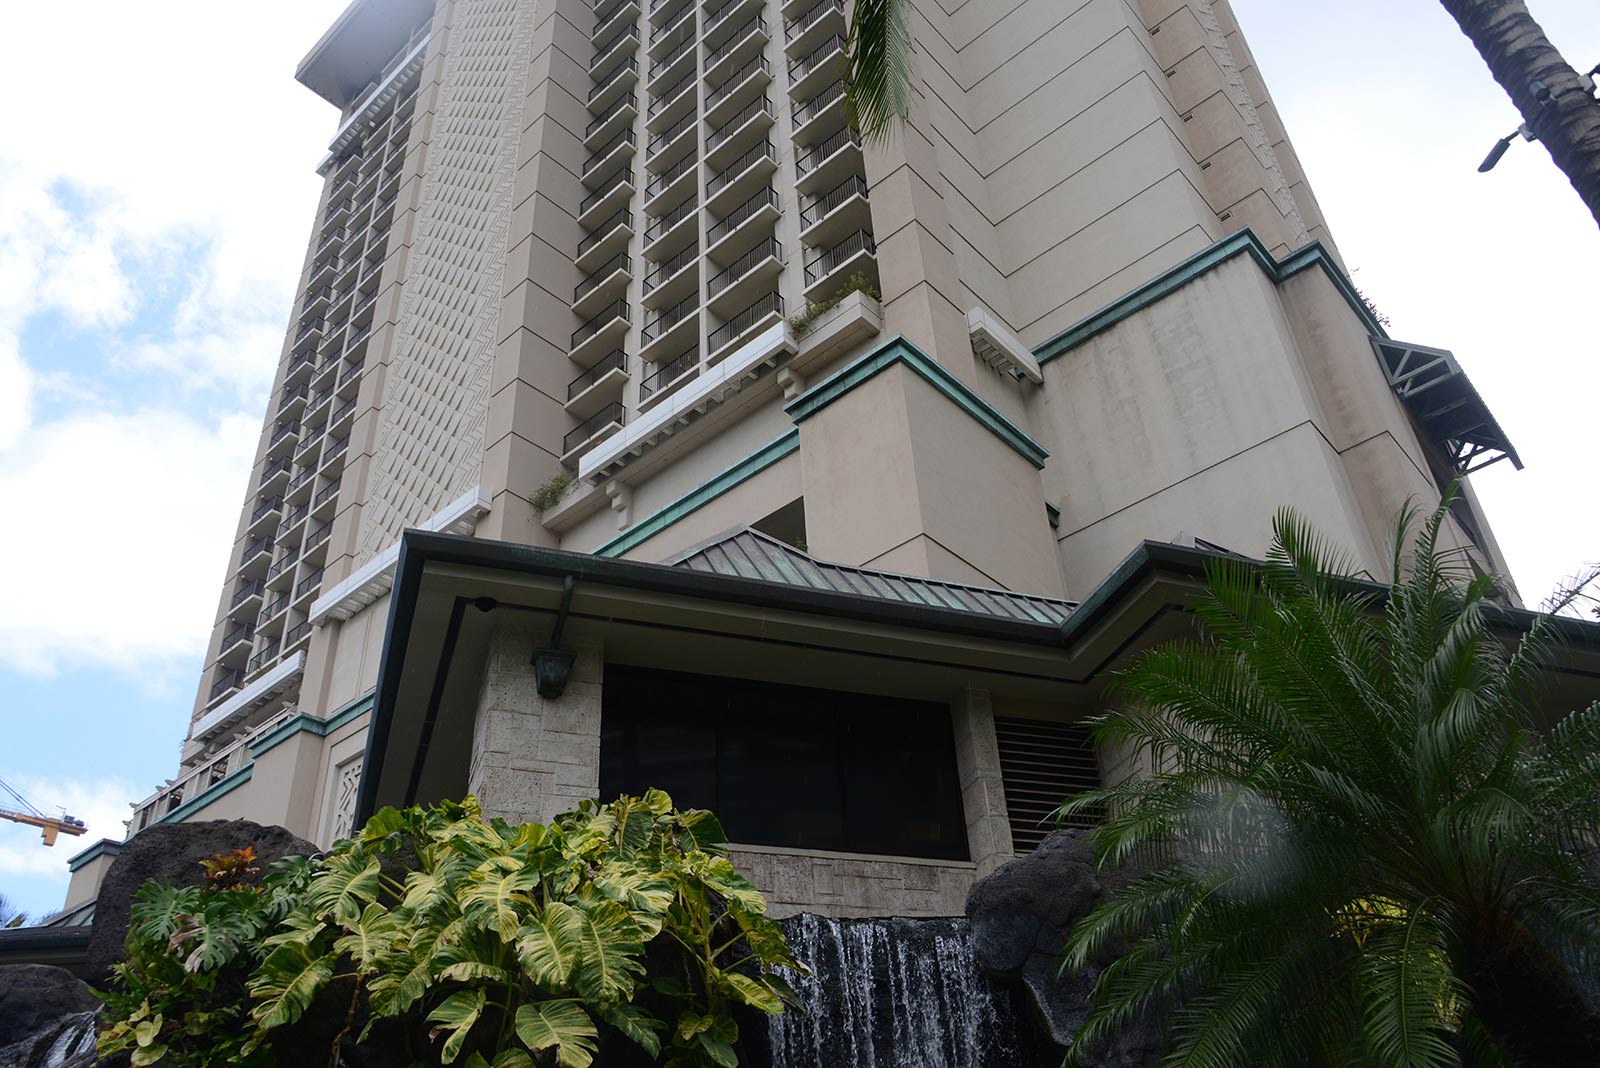 Hilton Grand Vacations Suites at Hilton Hawaiian Village – Kalia Tower timeshare resales